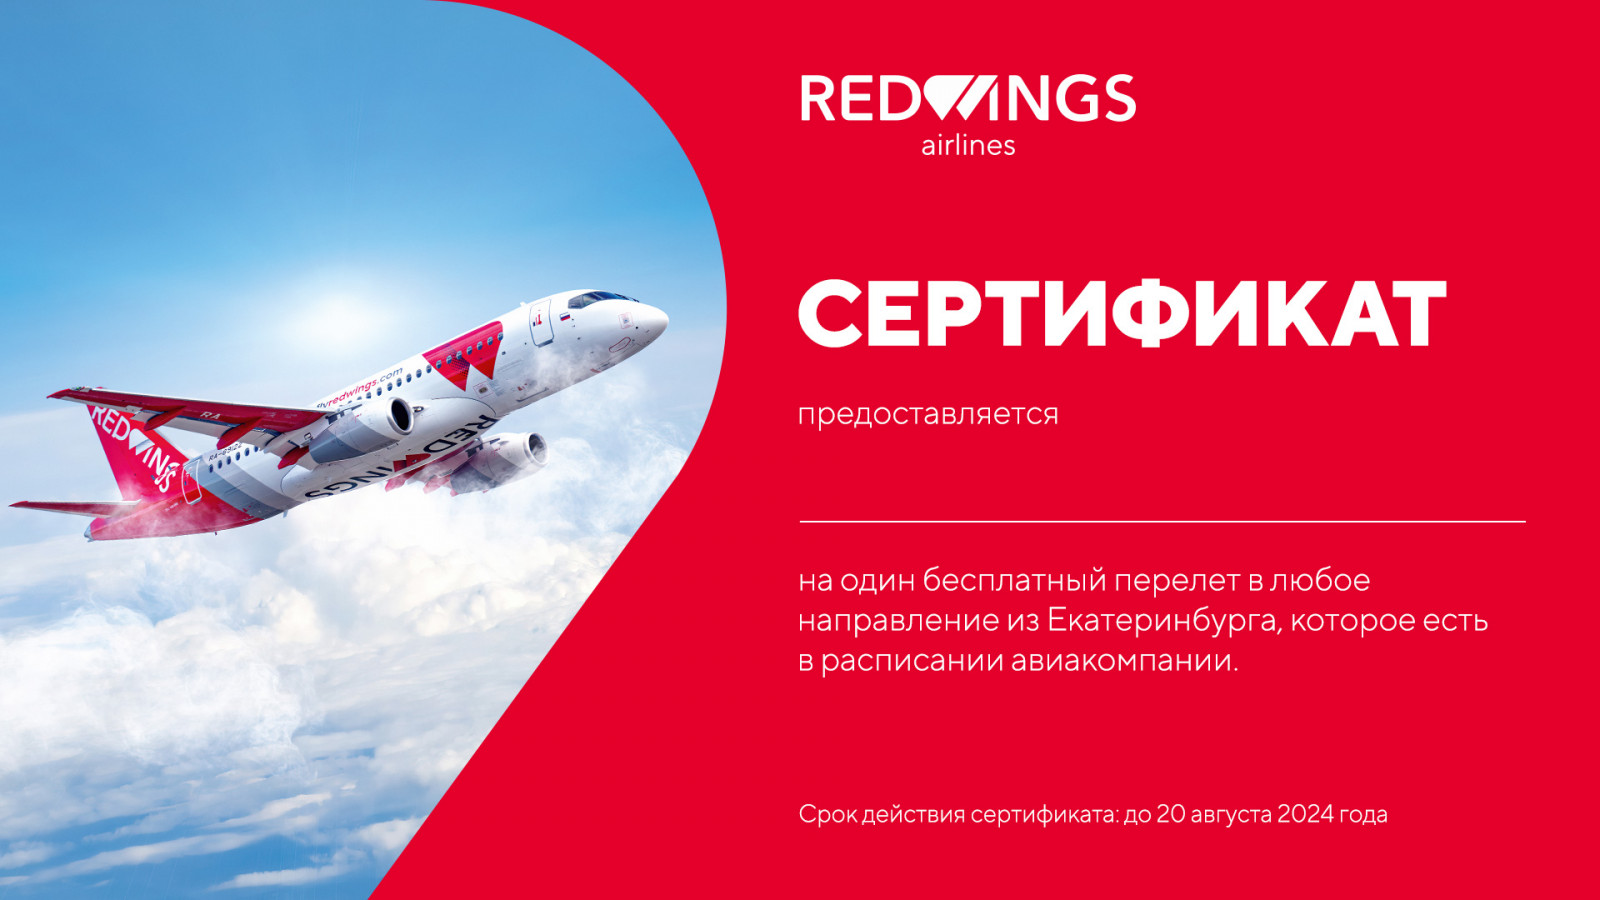 Сертификаты от авиакомпании Red Wings